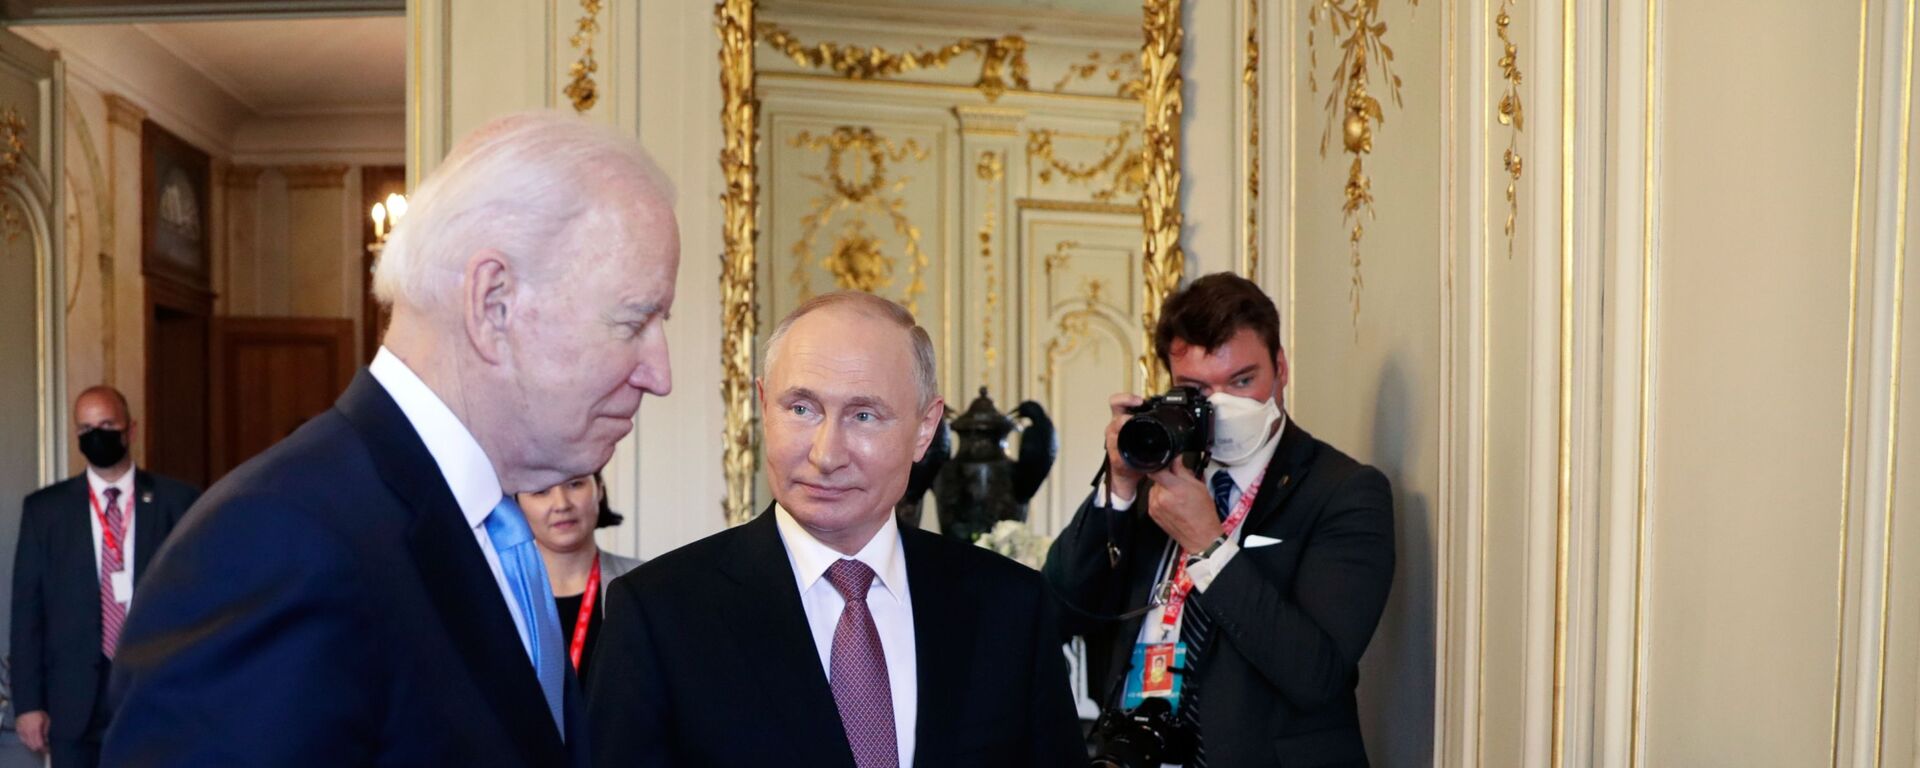 Vladimir Putin și Joe Biden - Sputnik Moldova, 1920, 08.12.2021